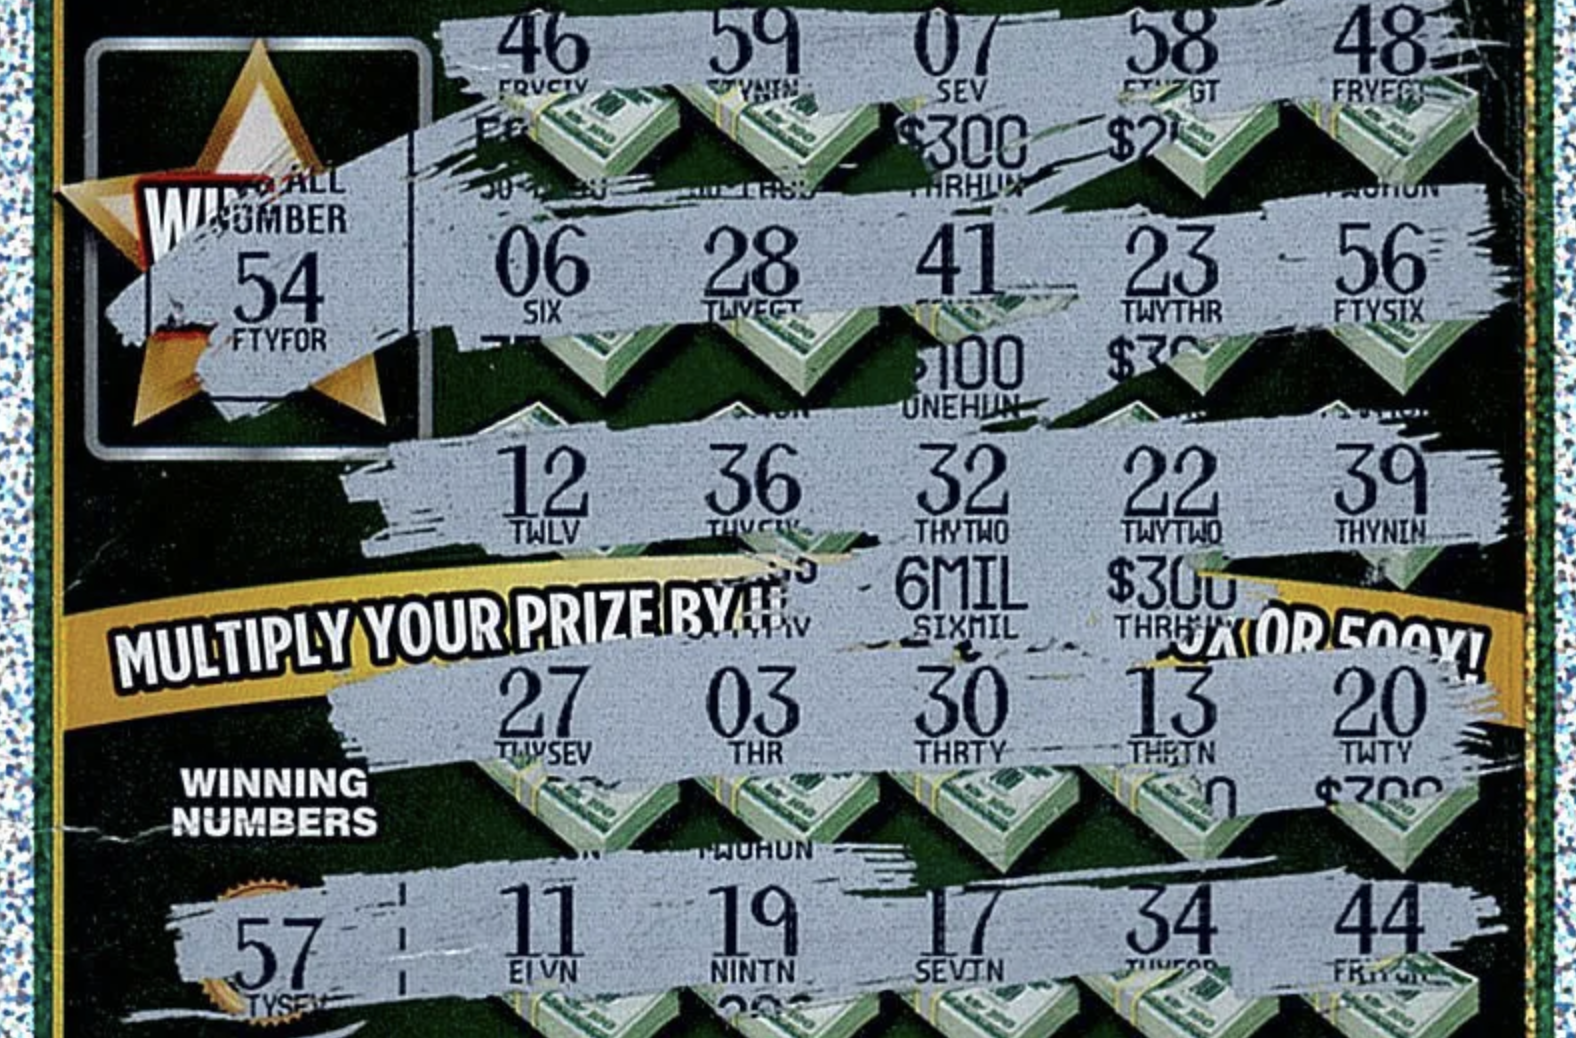 Michigan Lotery Club wen $6 miljoen om verbande uit te vee